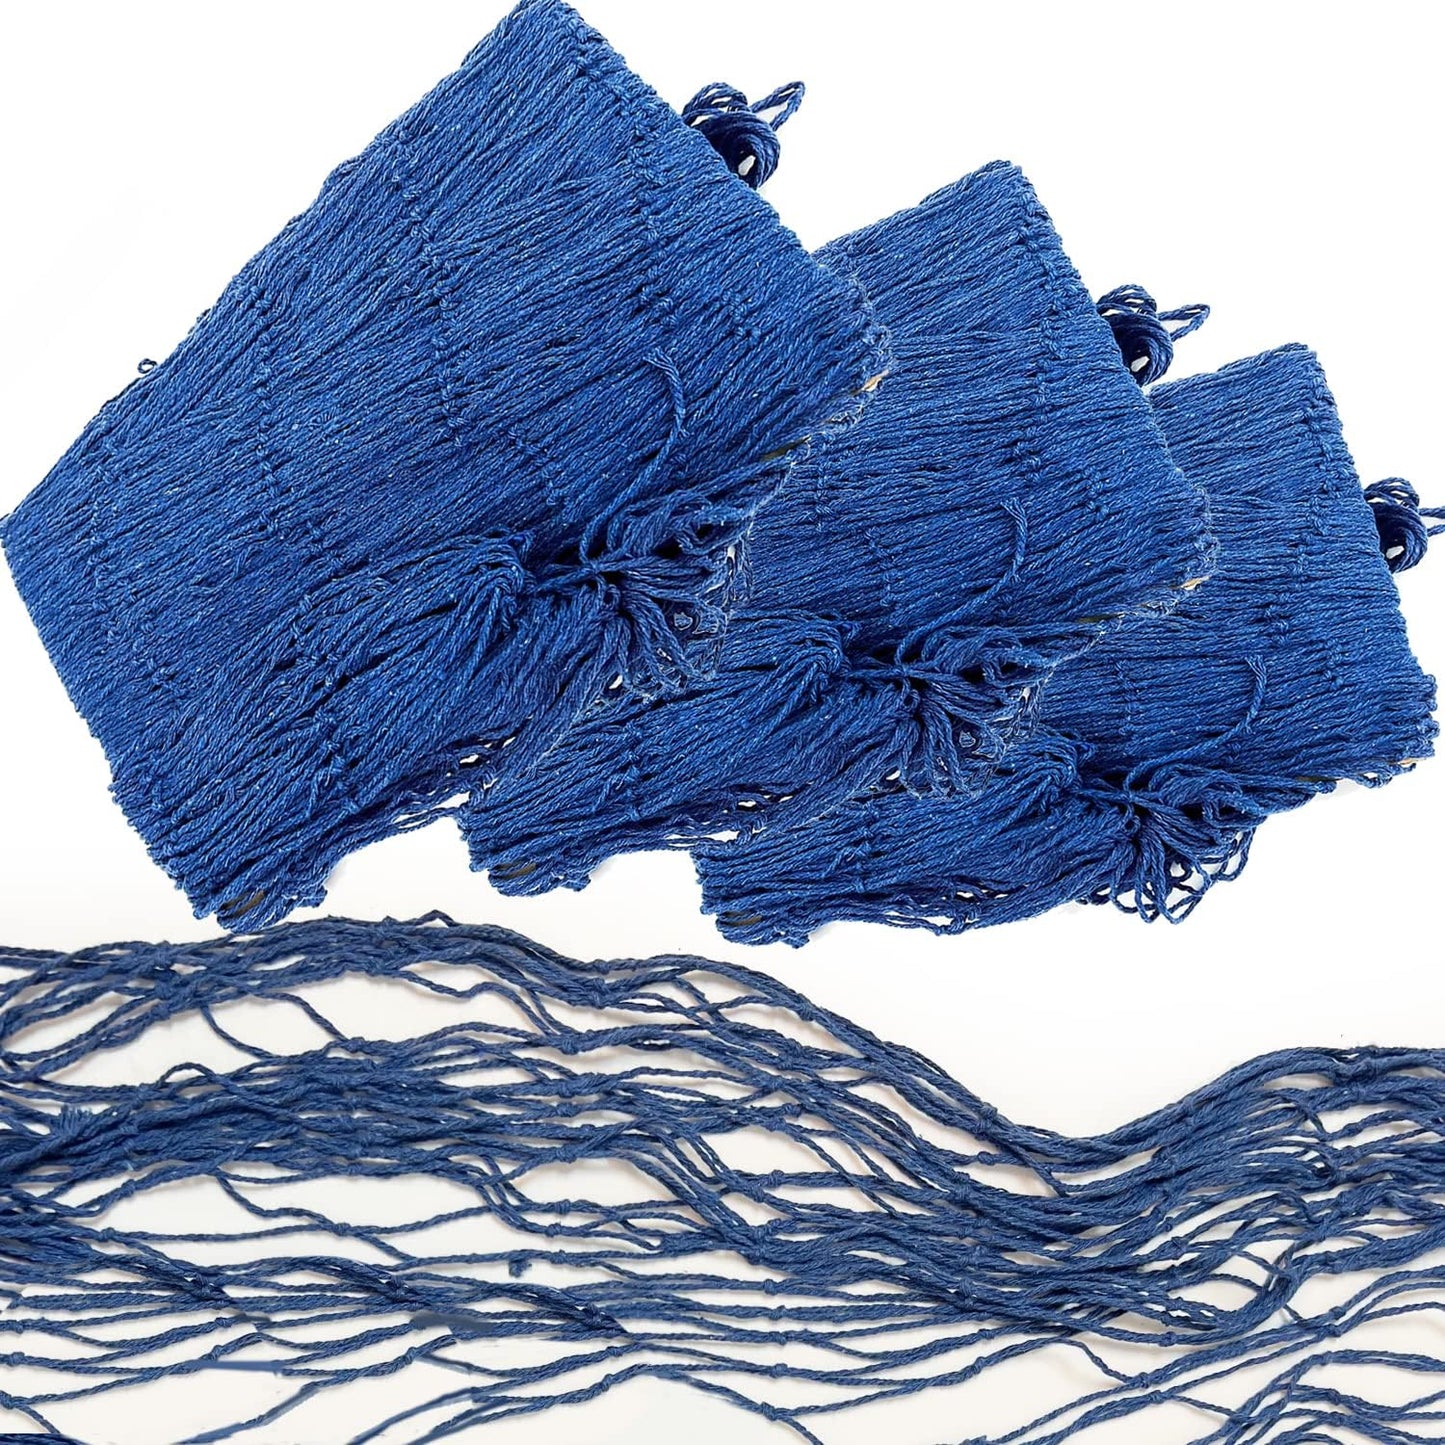 GIFTEXPRESS Red de pesca decorativa azul de algodón natural (14 pies x 4 pies)